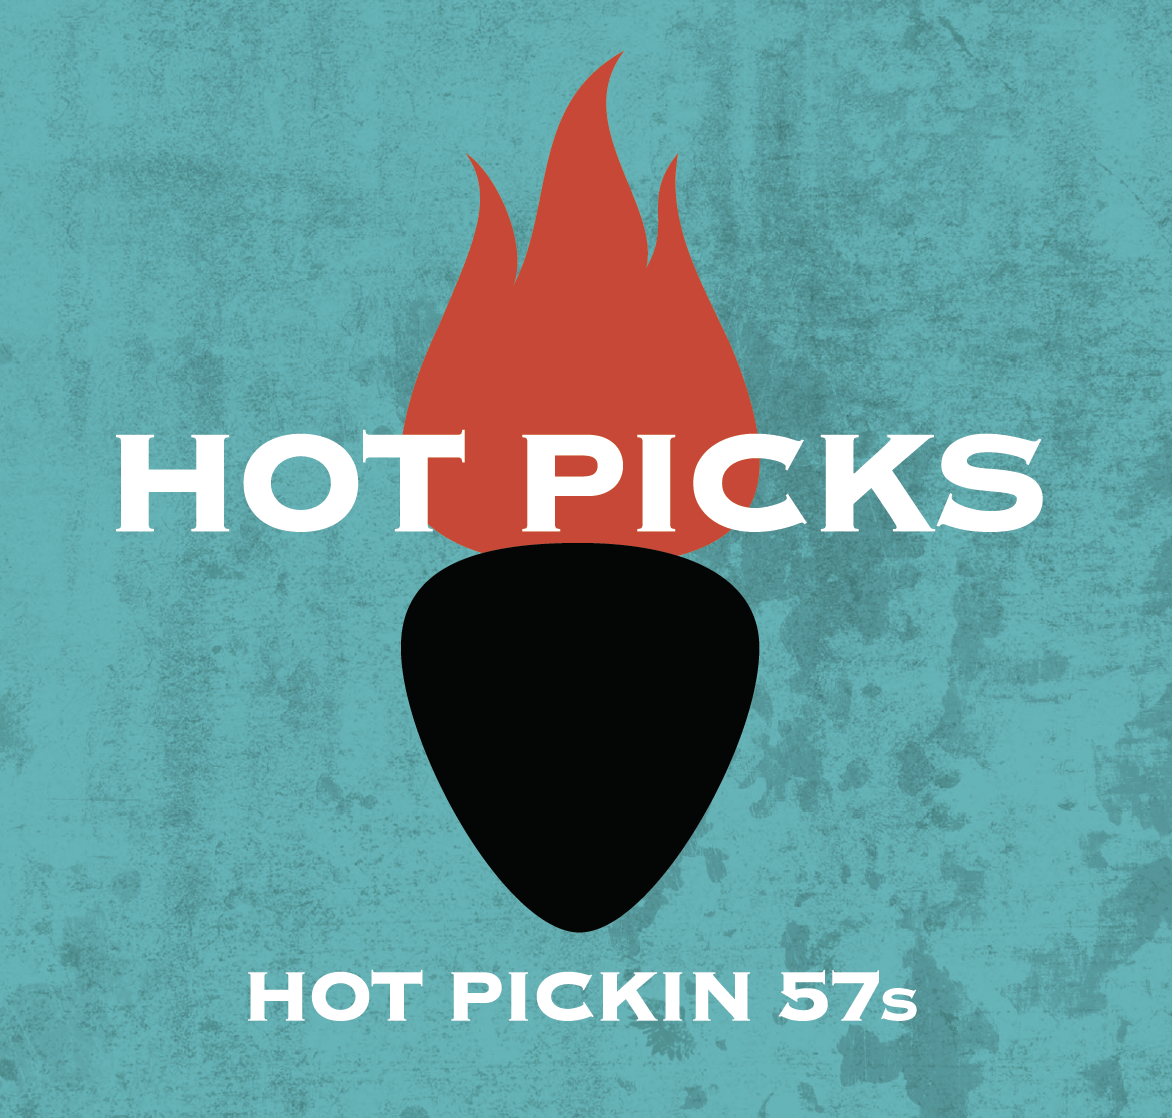 Hot Pickin 57s - Hot Picks